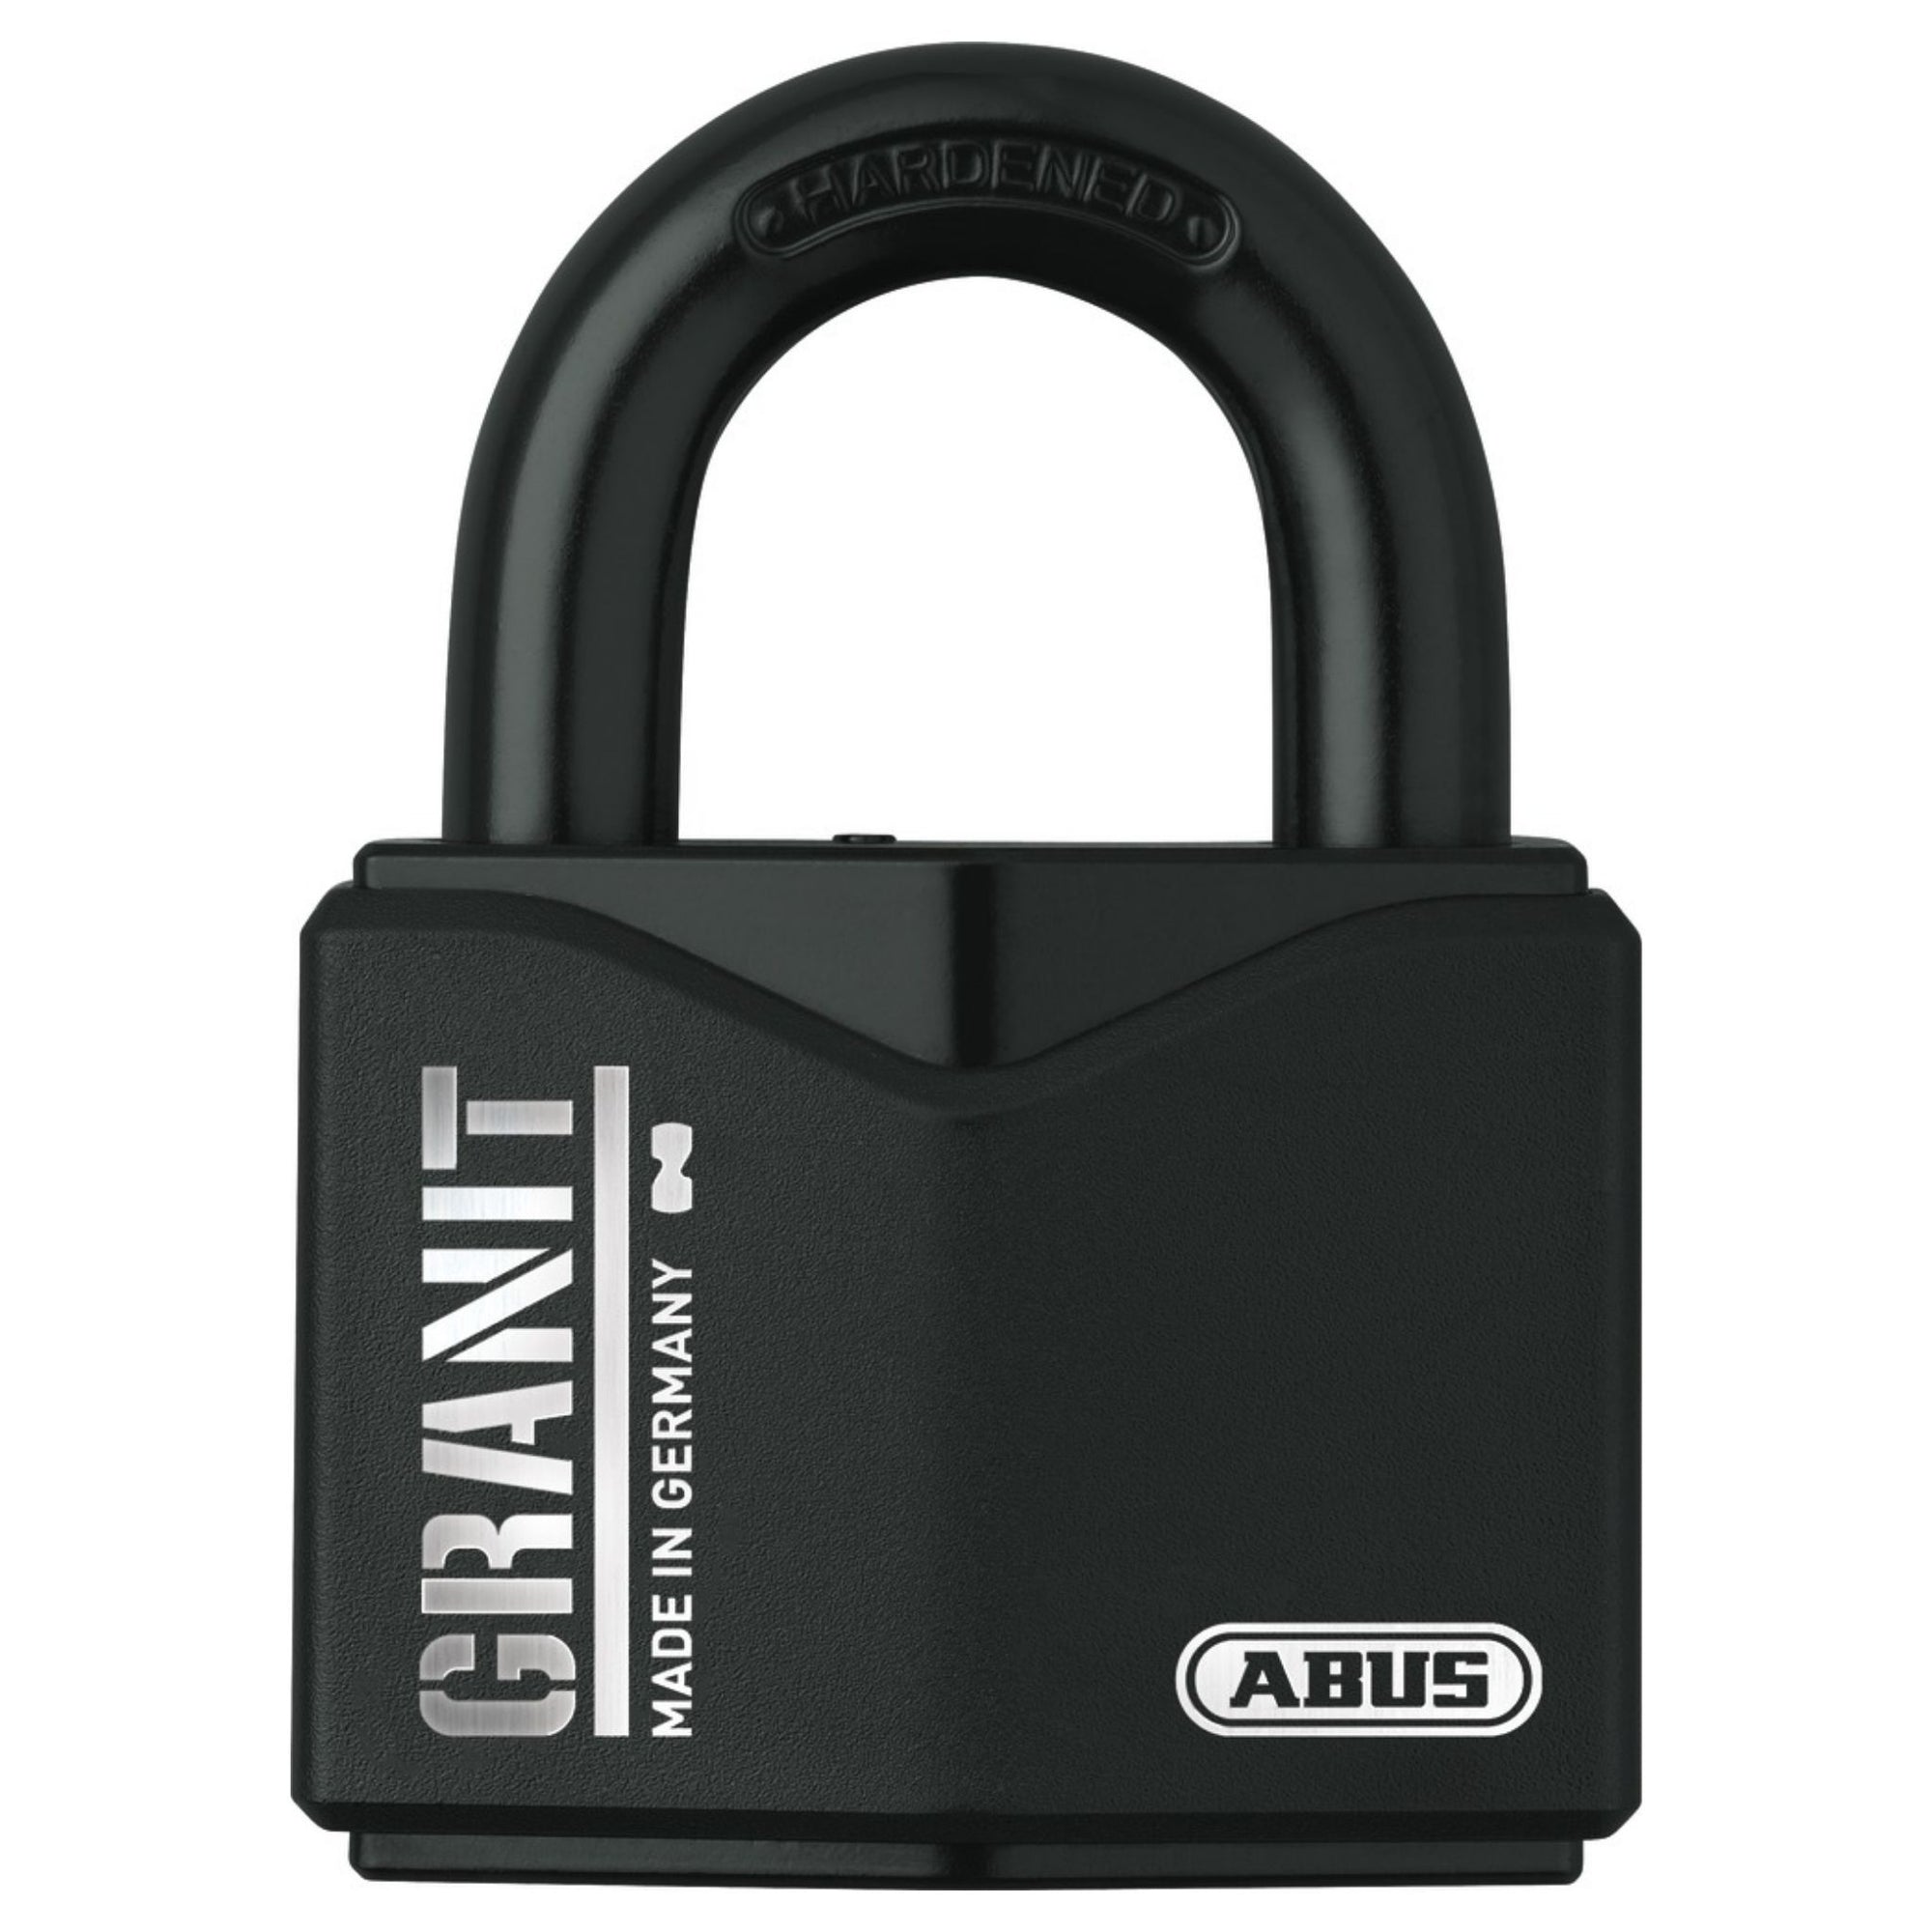 Abus 37RK/55 KA 124316 Granit Lock Keyed Alike Black Granite Padlocks Matched to Existing Key# KA124316 - The Lock Source